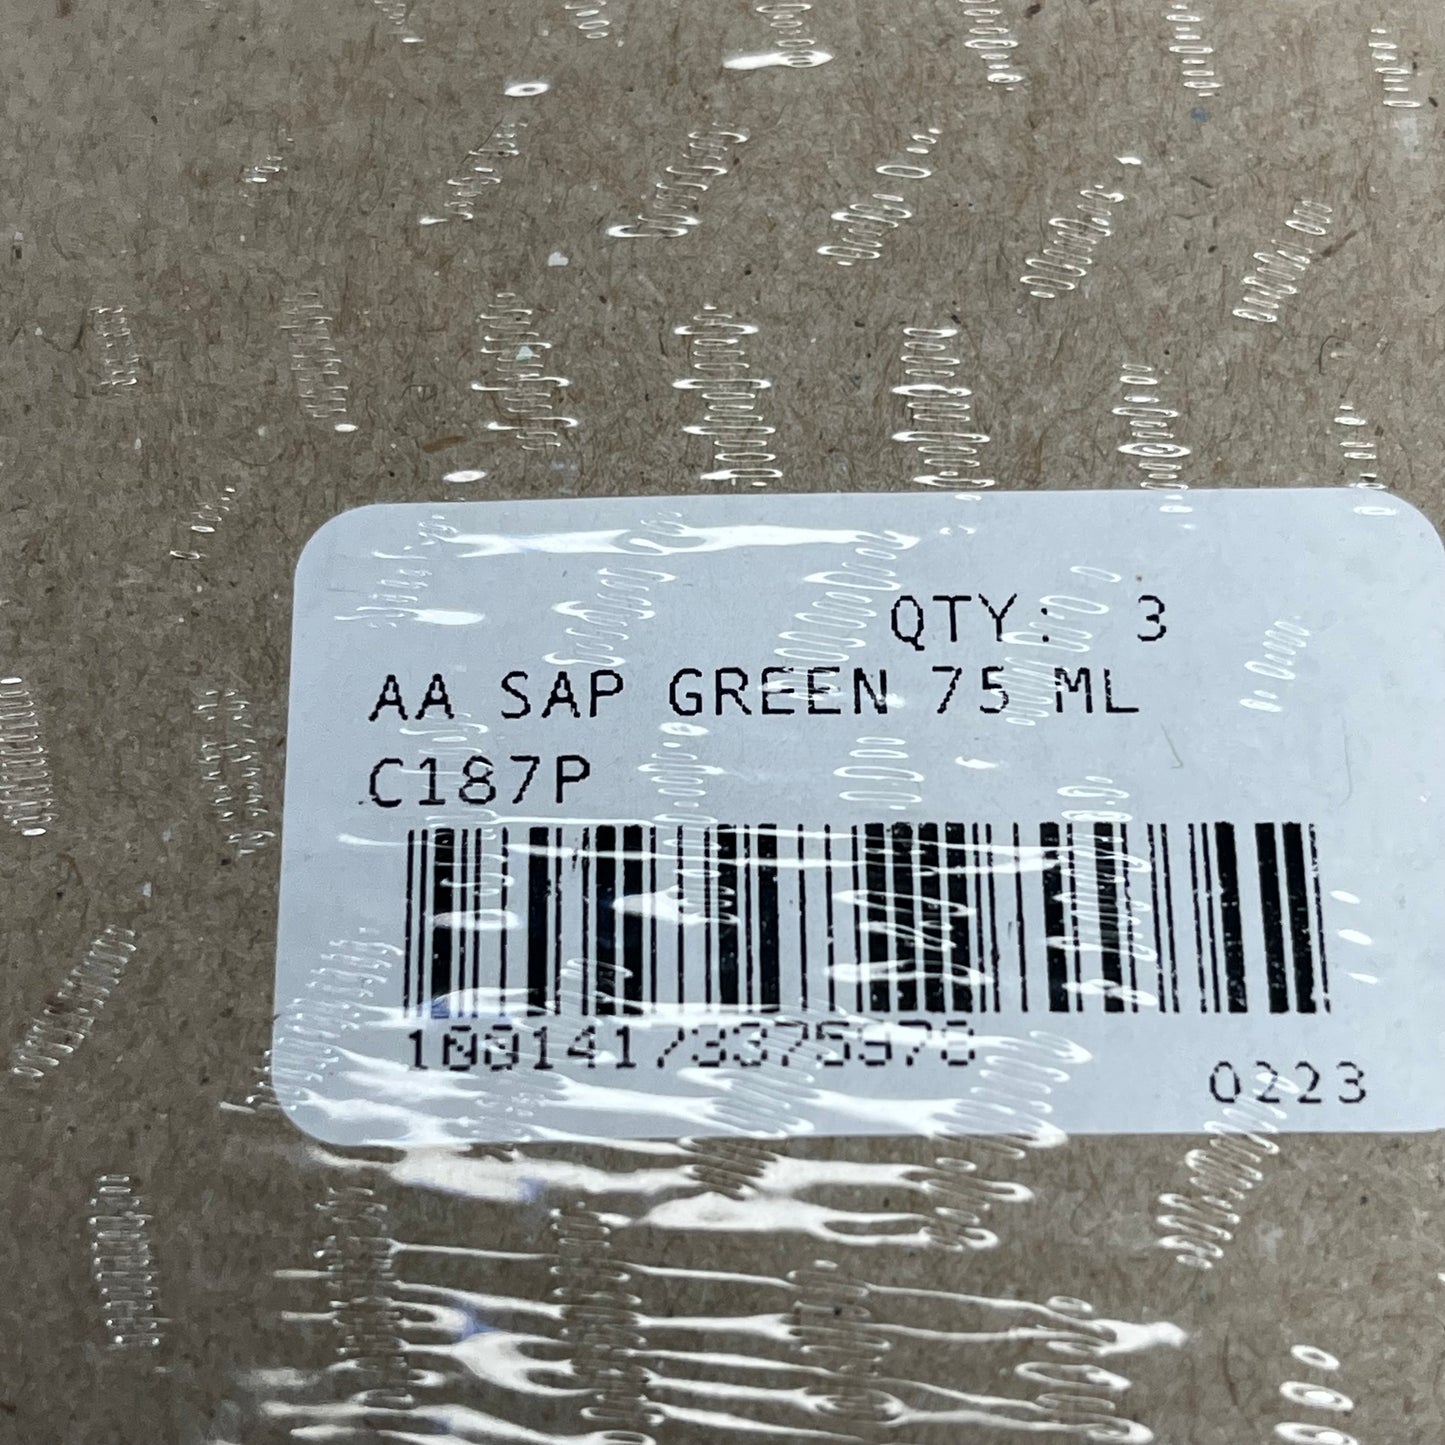 GRUMBACHER 3-PACK! Academy Acrylic Sap Green 2.5 fl oz / 75 ml C187P (New)